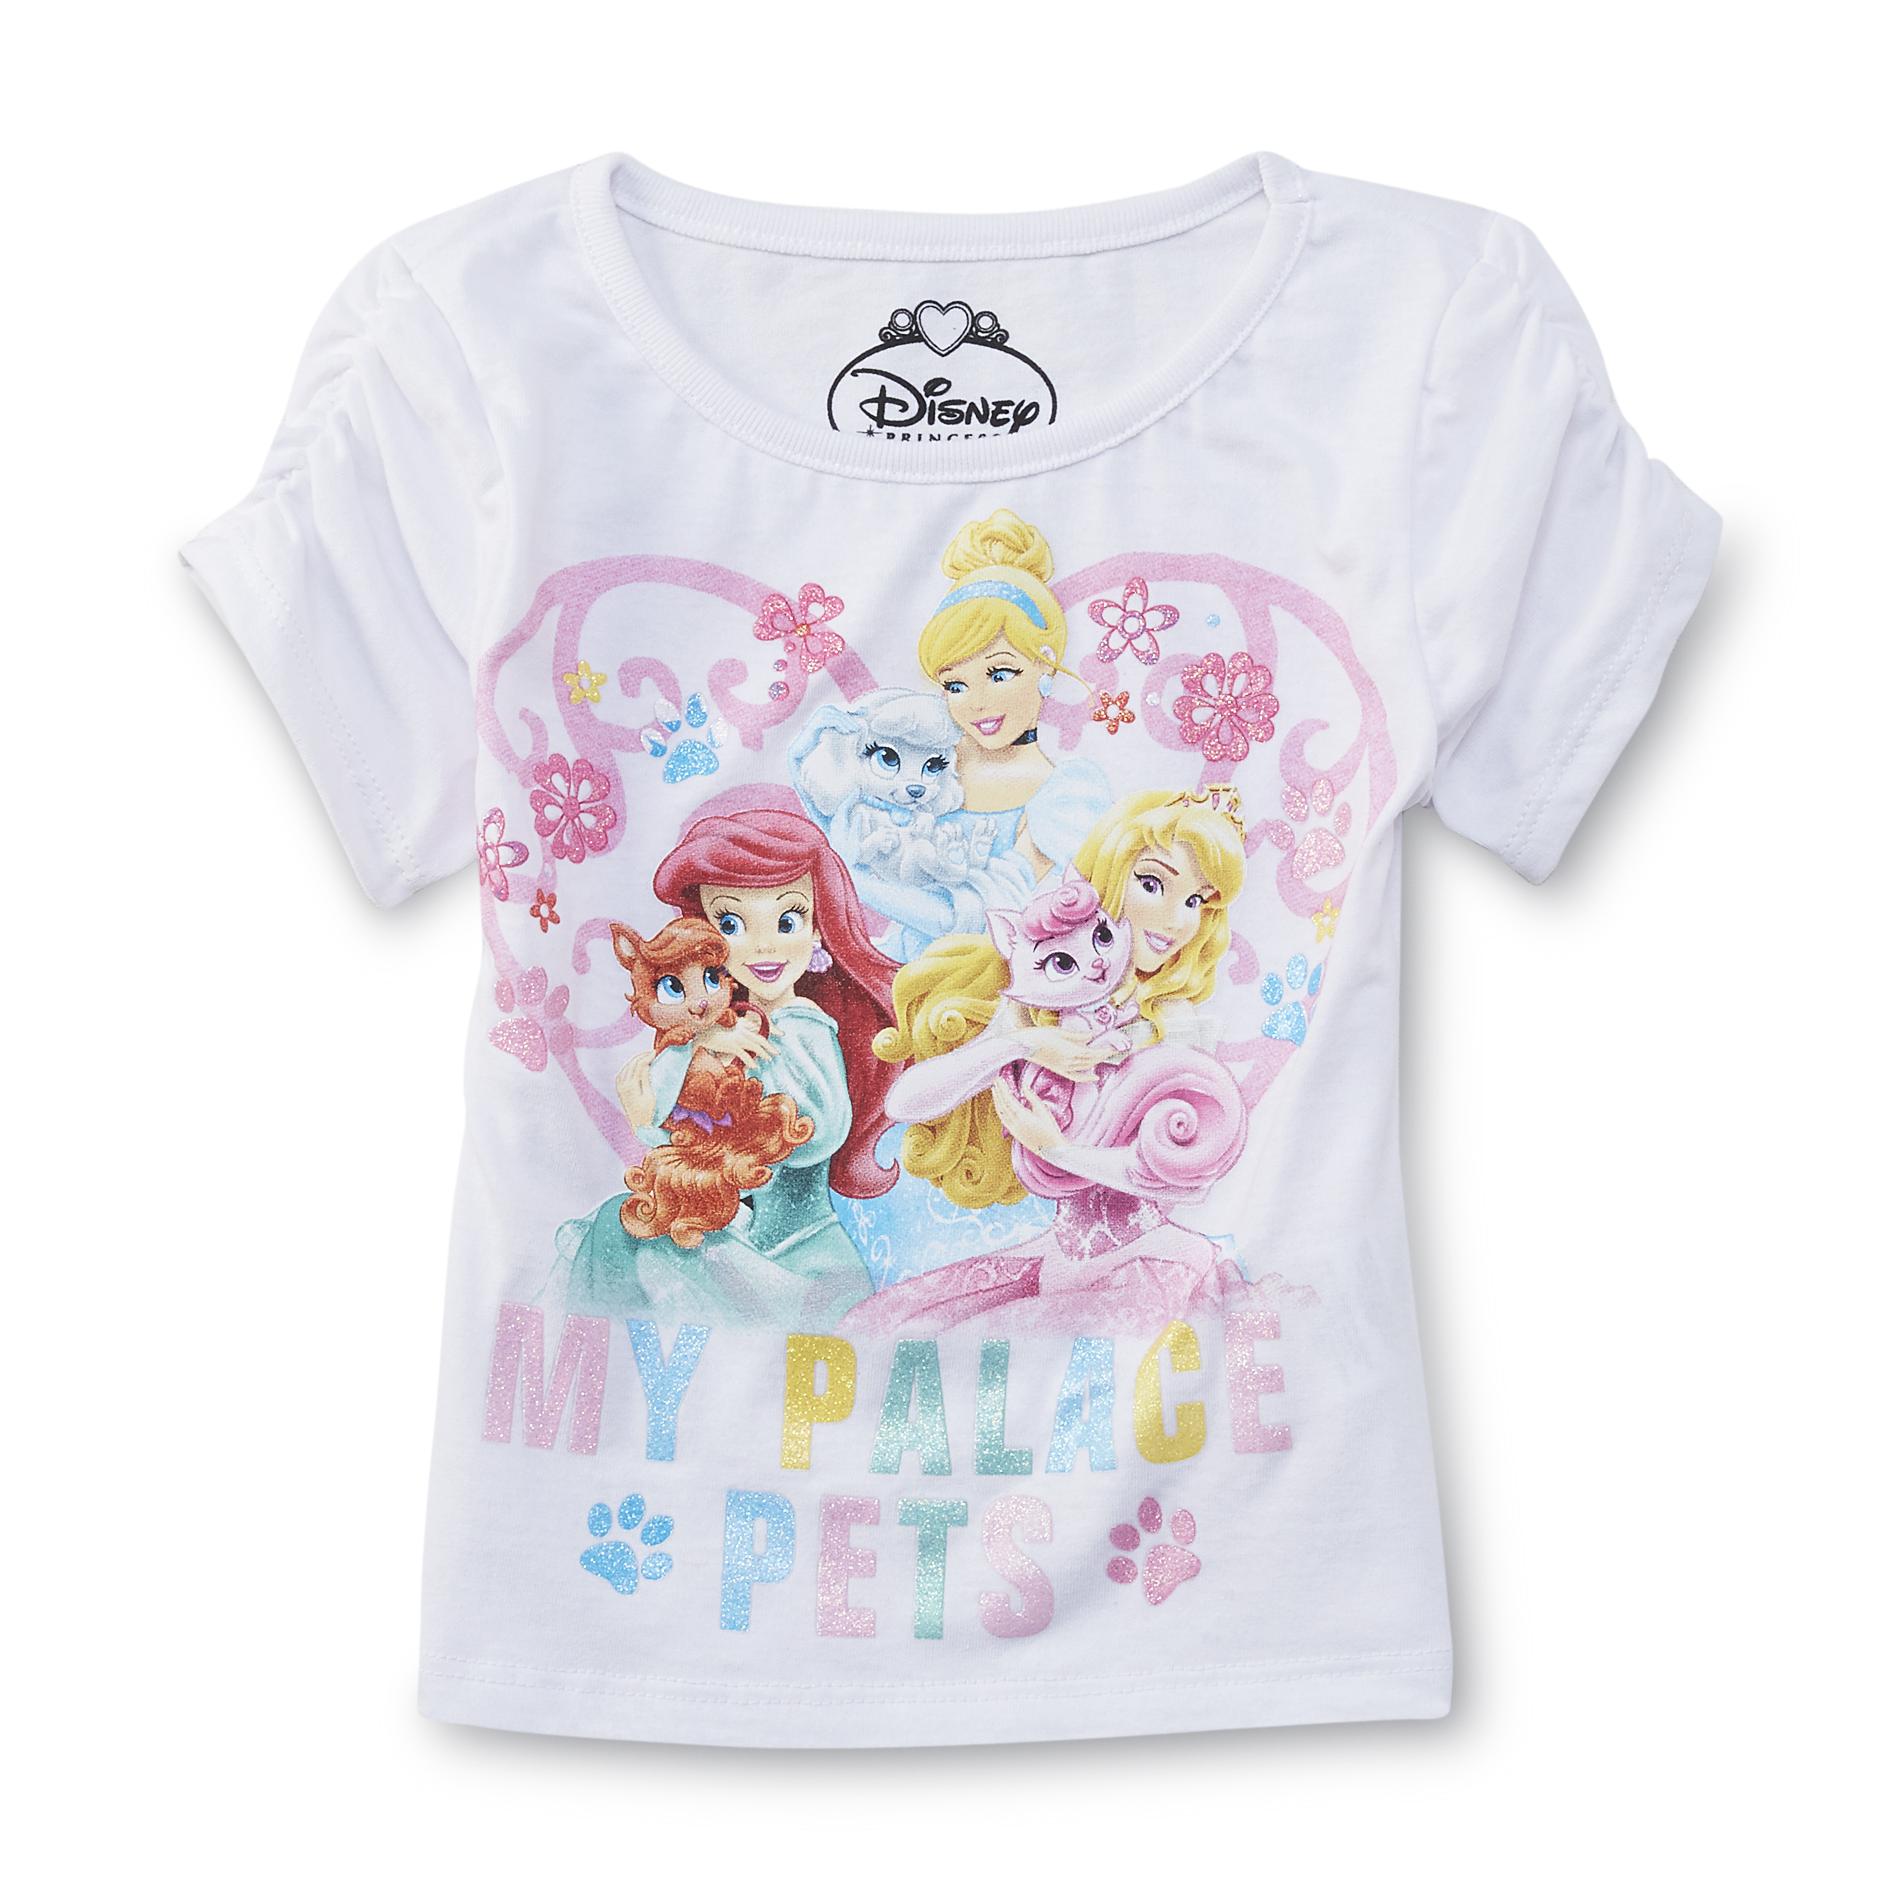 Disney Palace Pets Toddler Girl's Graphic T-Shirt